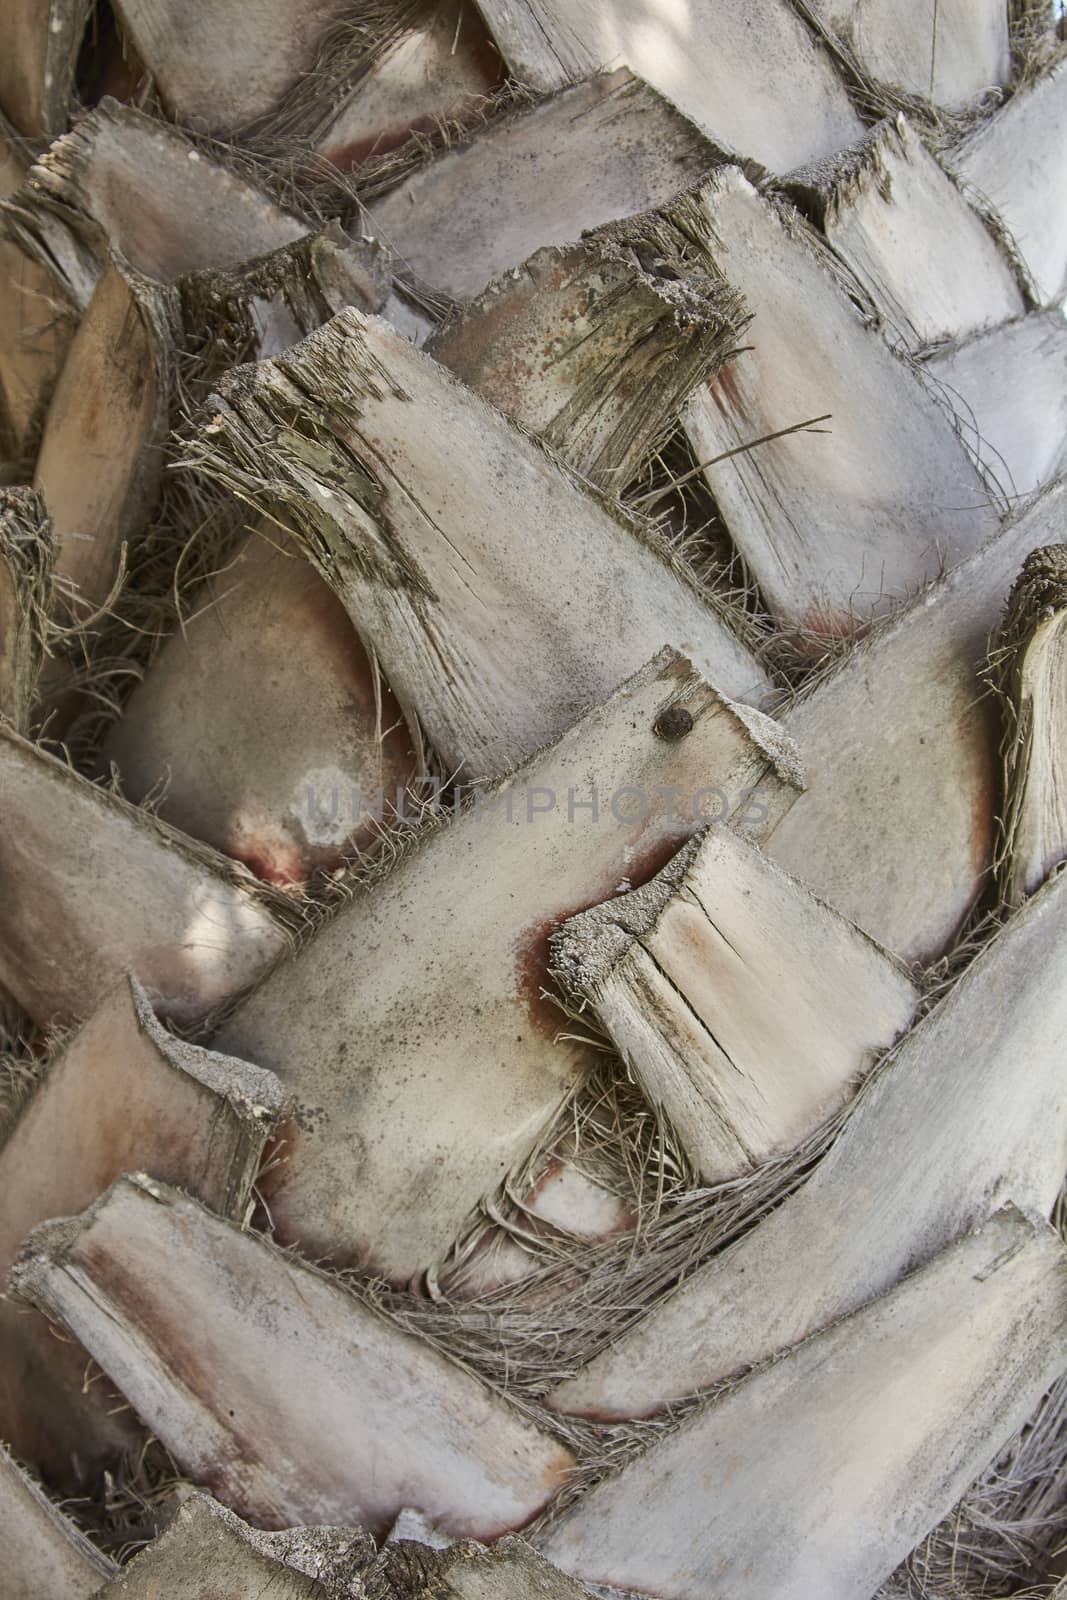 Mediterranean palm bark in close up shot